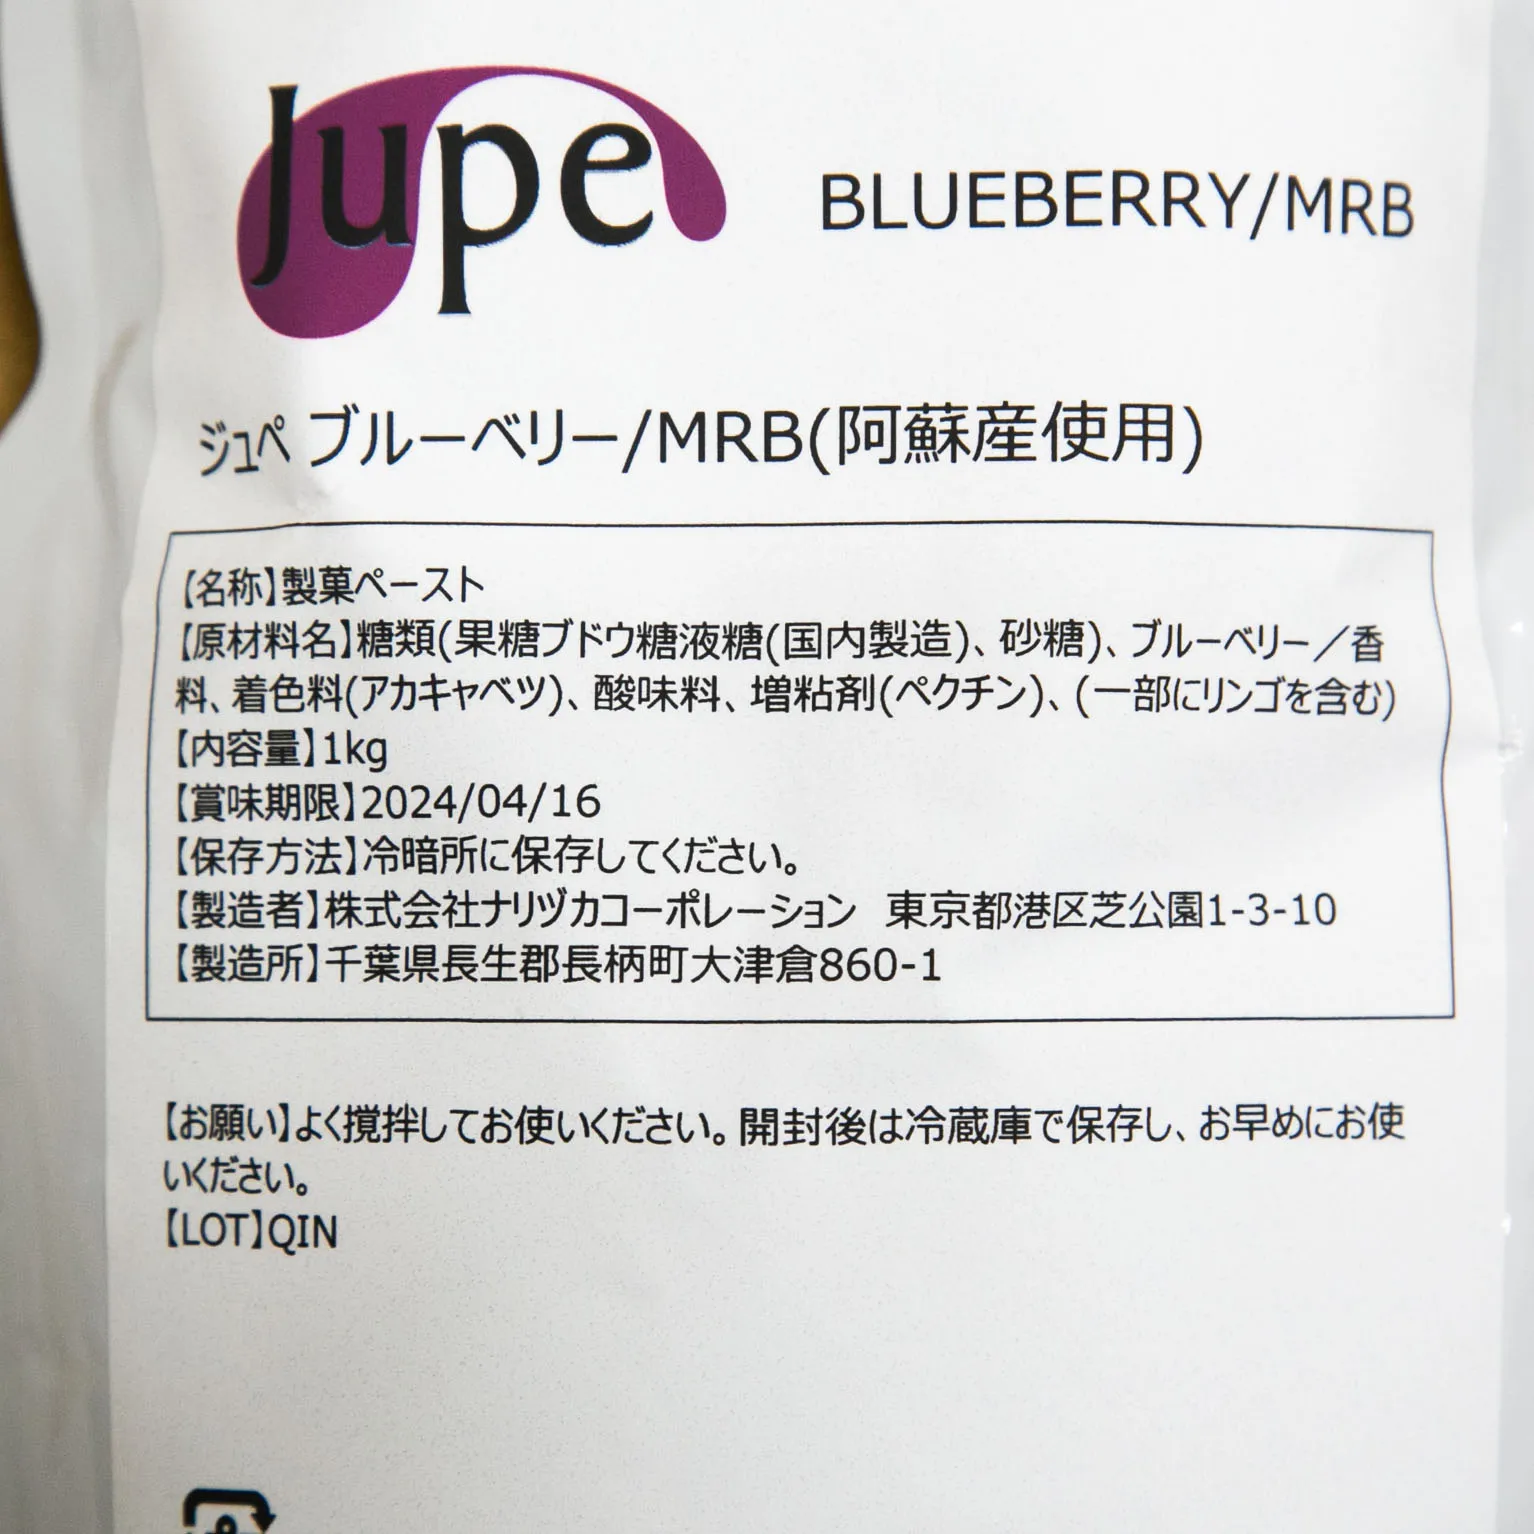 Jupe 熊本県産ブルーベリー 1